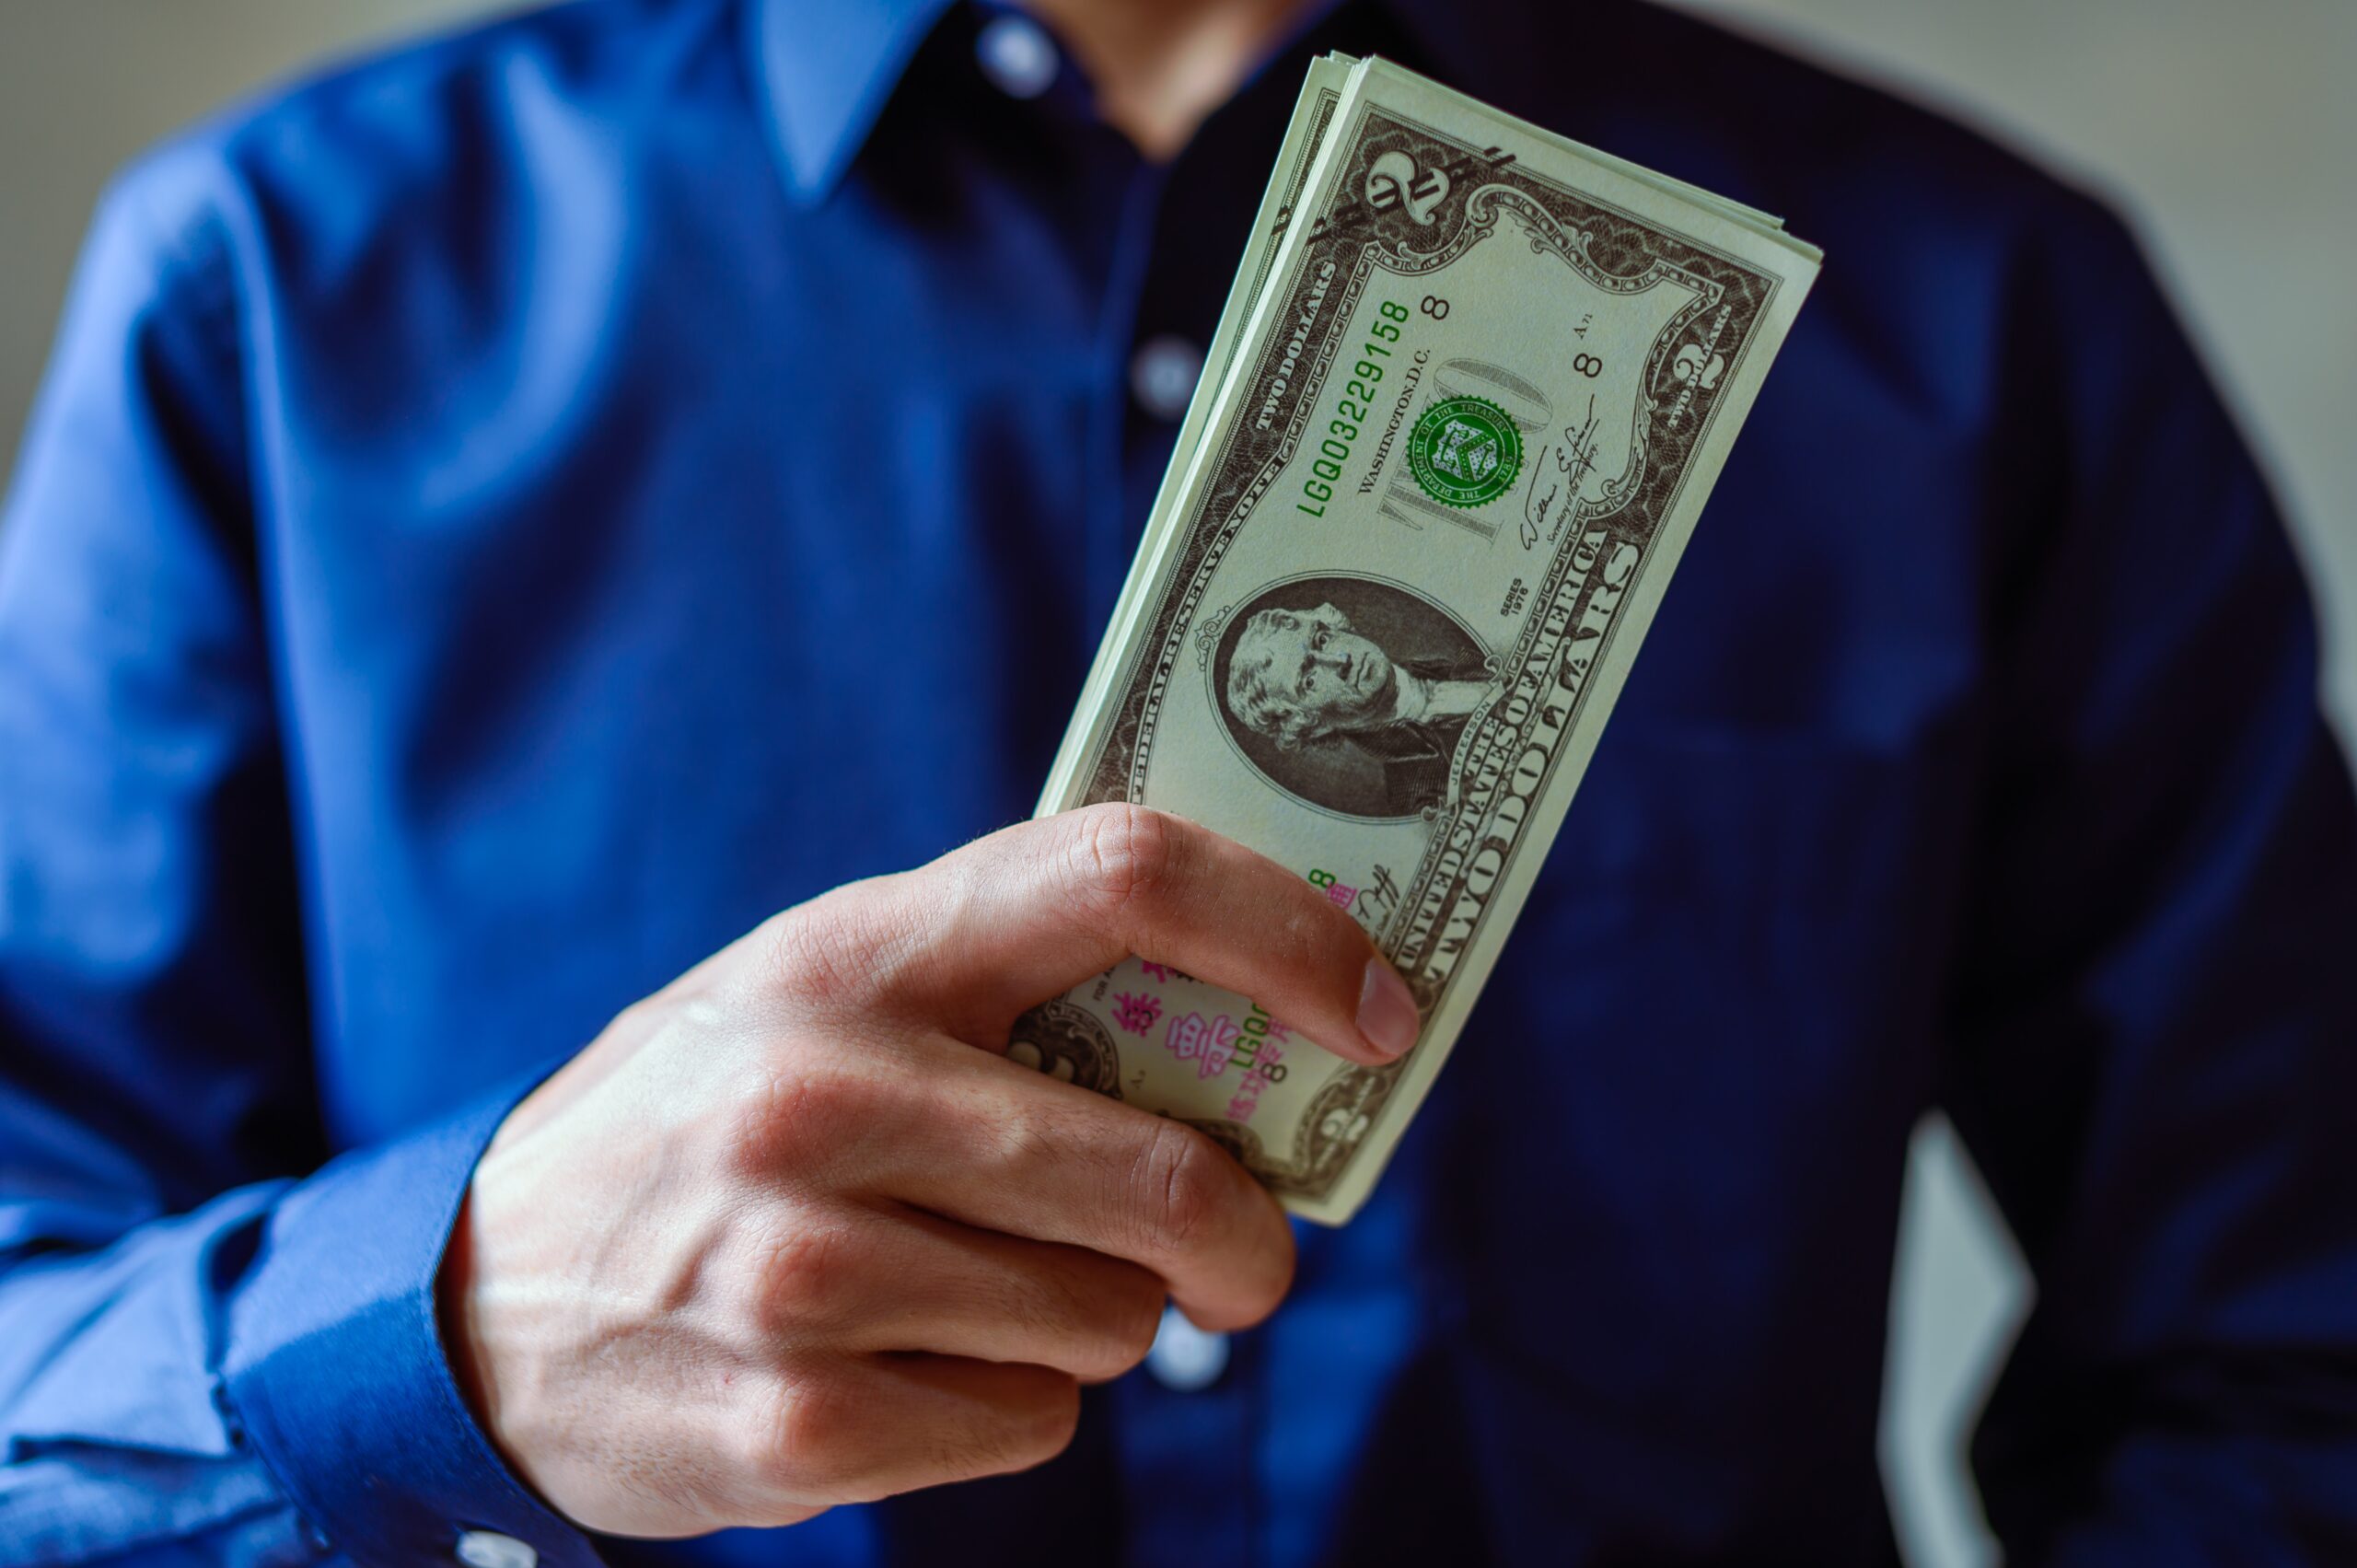 A man wearing blue long sleeves showing money bills